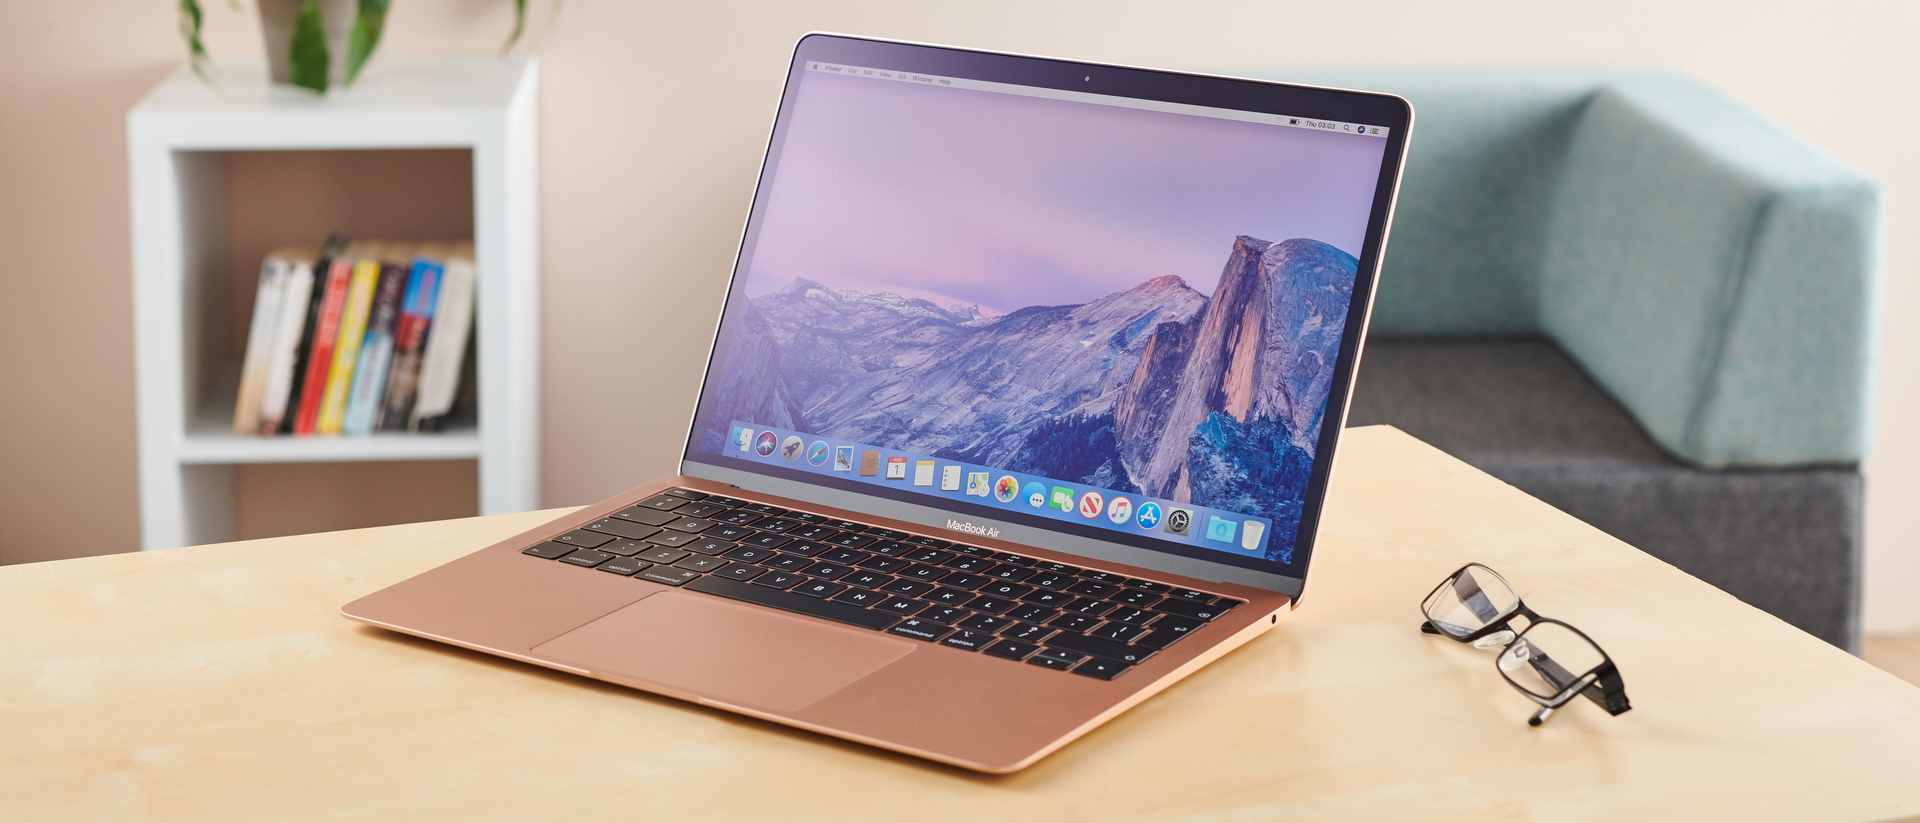 Apple macbook air gold 2019 4ktv 55 inch